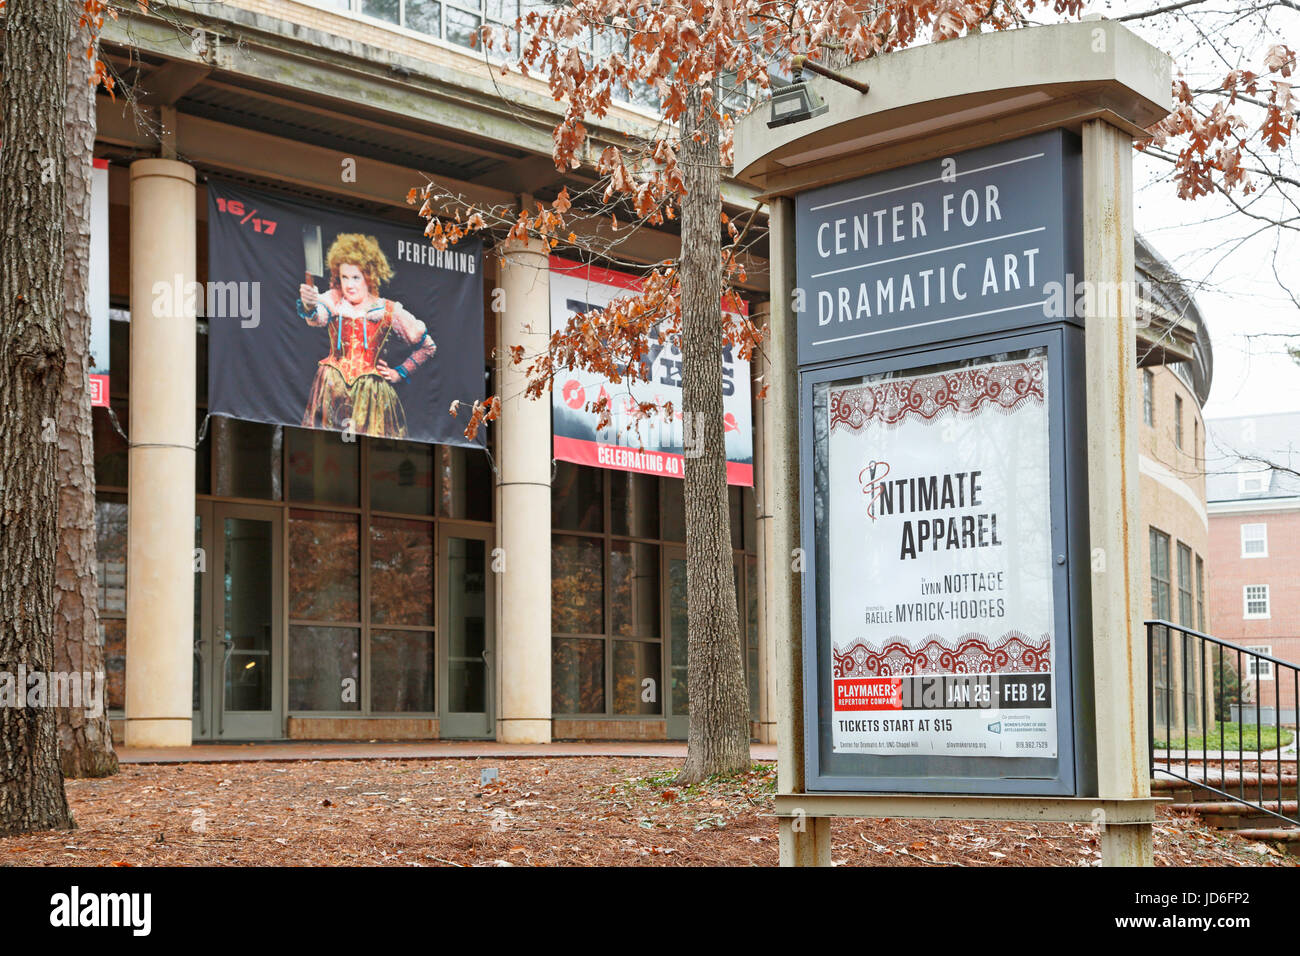 Center for Dramatic Art, University of North Carolina Chapel Hill, UNC. Stock Photo